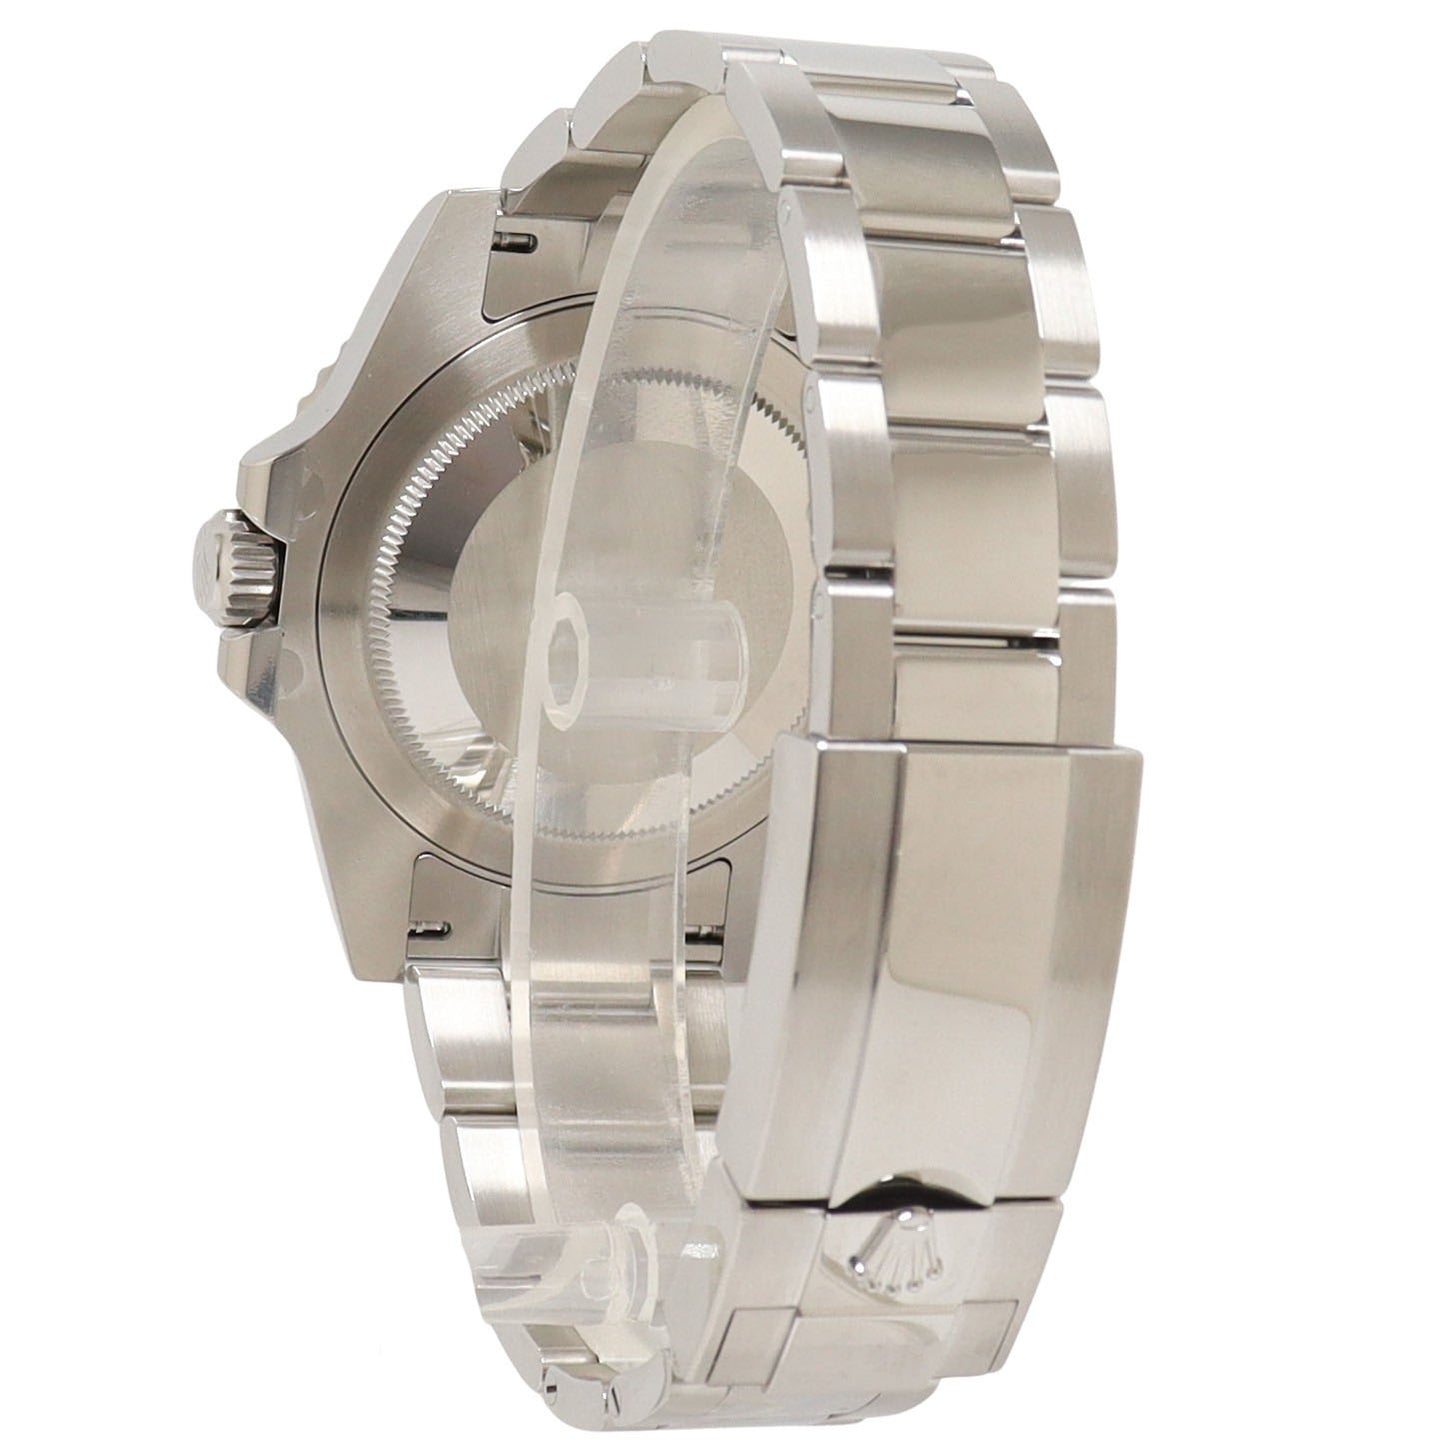 Rolex GMT Master II "Batman" 40mm Stainless Steel Black Dot Dial Watch Reference# 116710BLNR - Happy Jewelers Fine Jewelry Lifetime Warranty